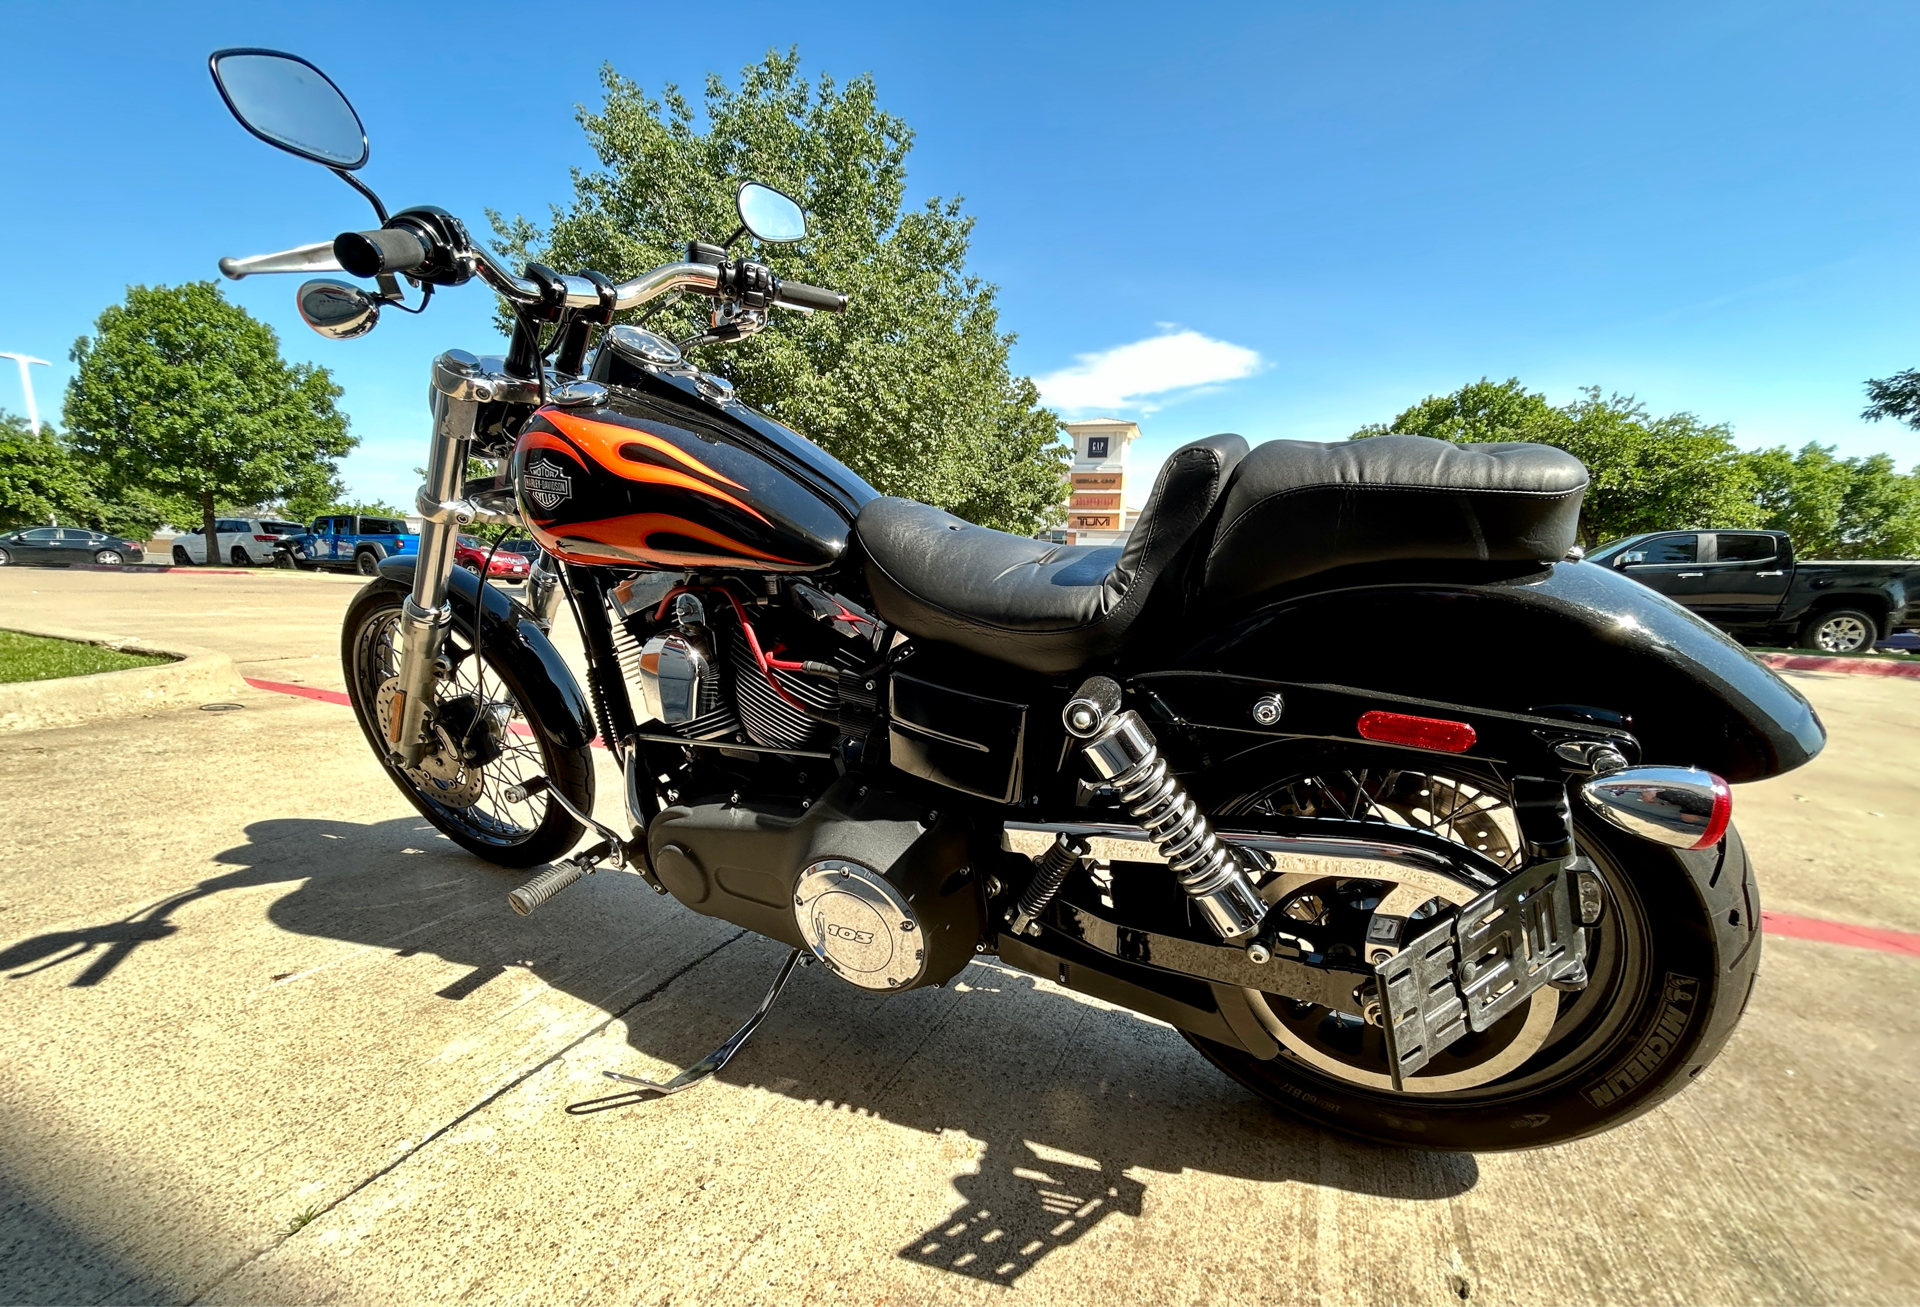 2013 Harley-Davidson Dyna® Wide Glide® in Grand Prairie, Texas - Photo 5